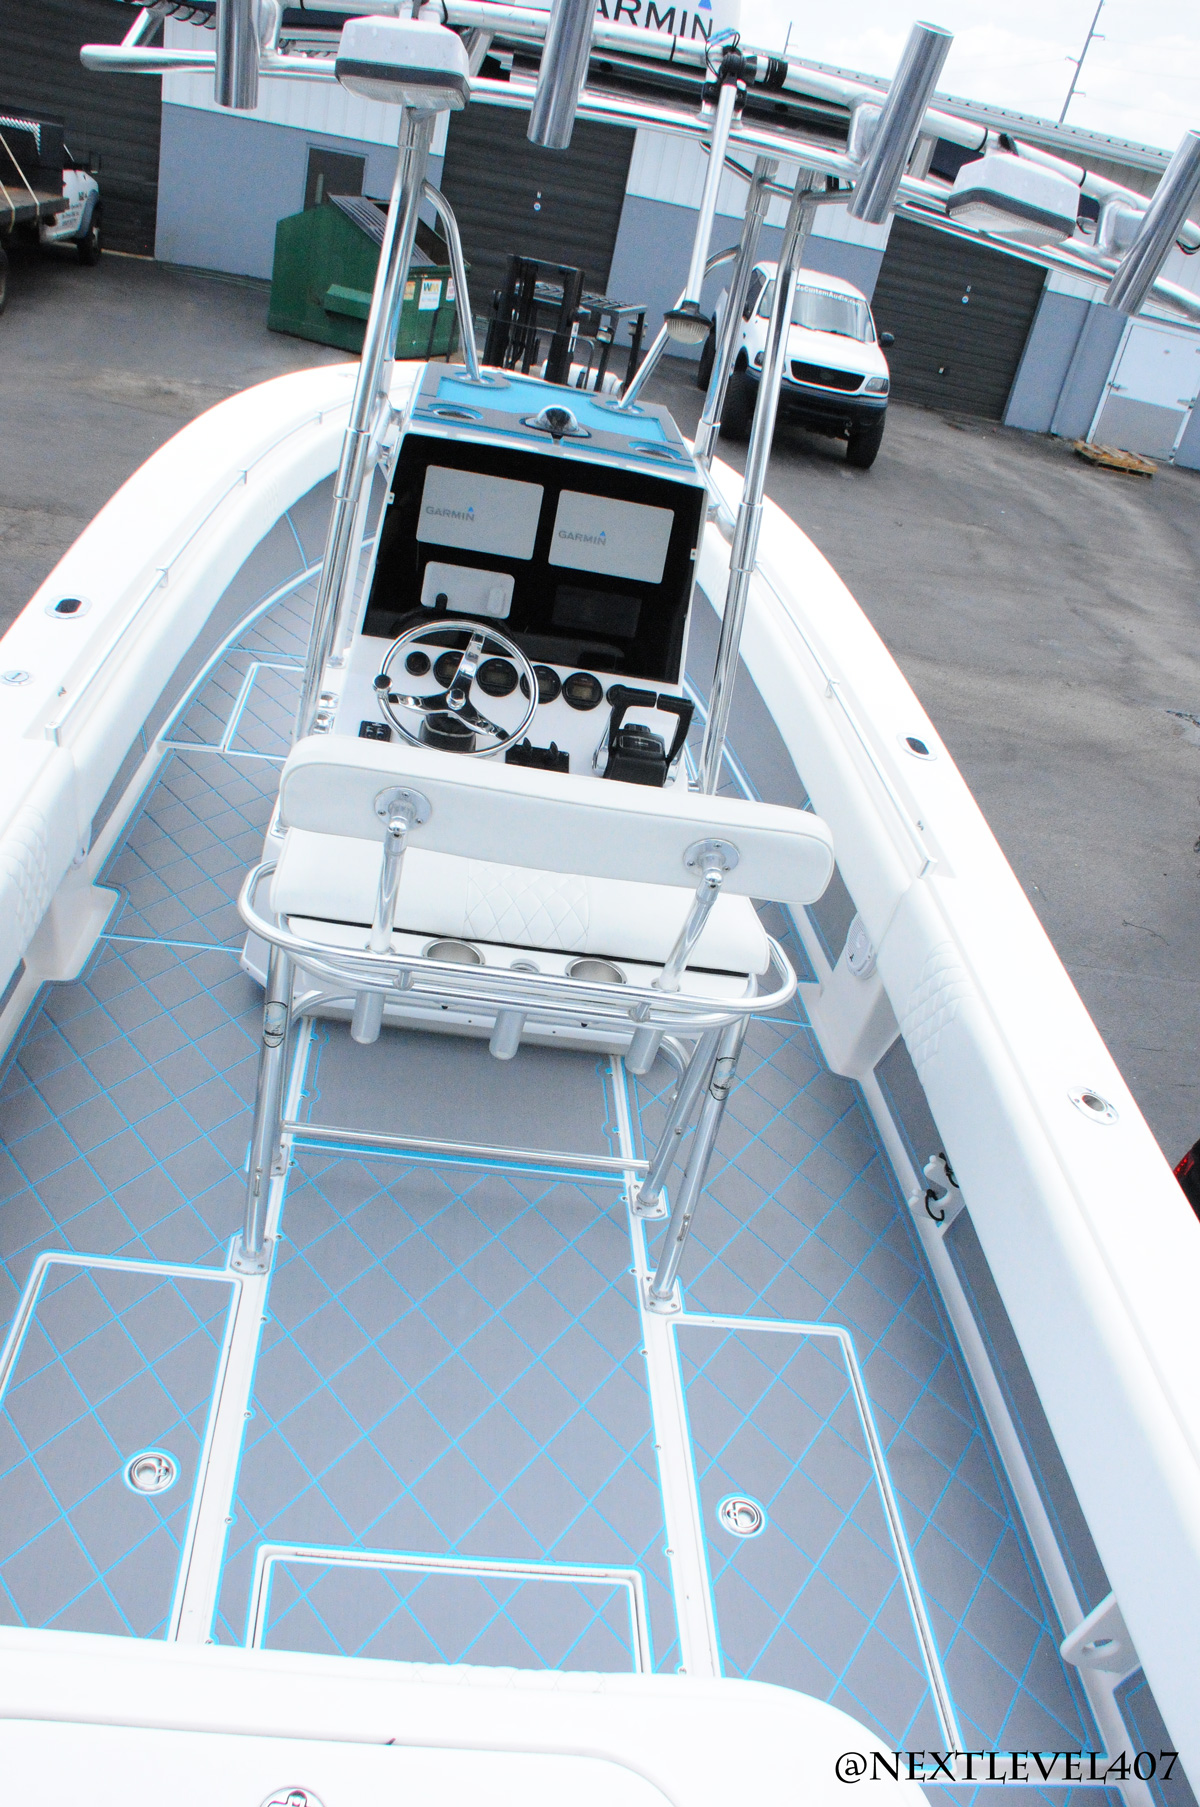 White-Contender-Fishing-Boat-Yamaha-Engines-Custom-SeaDek-Marine-Flooring-Blue-Gray-Pattern-Full-Rear-Profile-On-Trailer-Dual-Yamaha-Engines